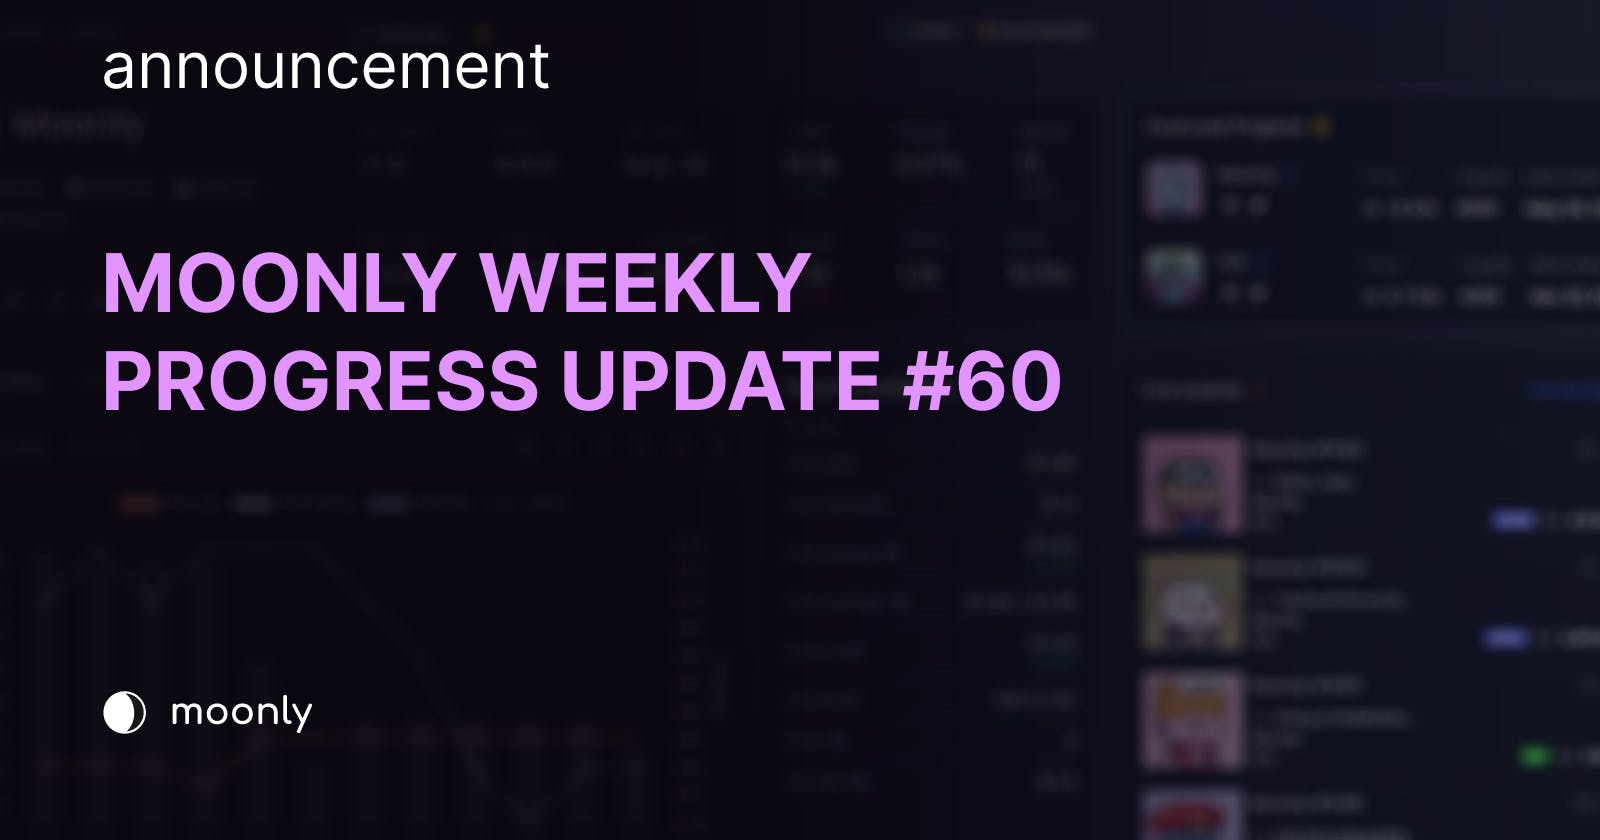 Moonly weekly progress update #60 - Automatio FAQ